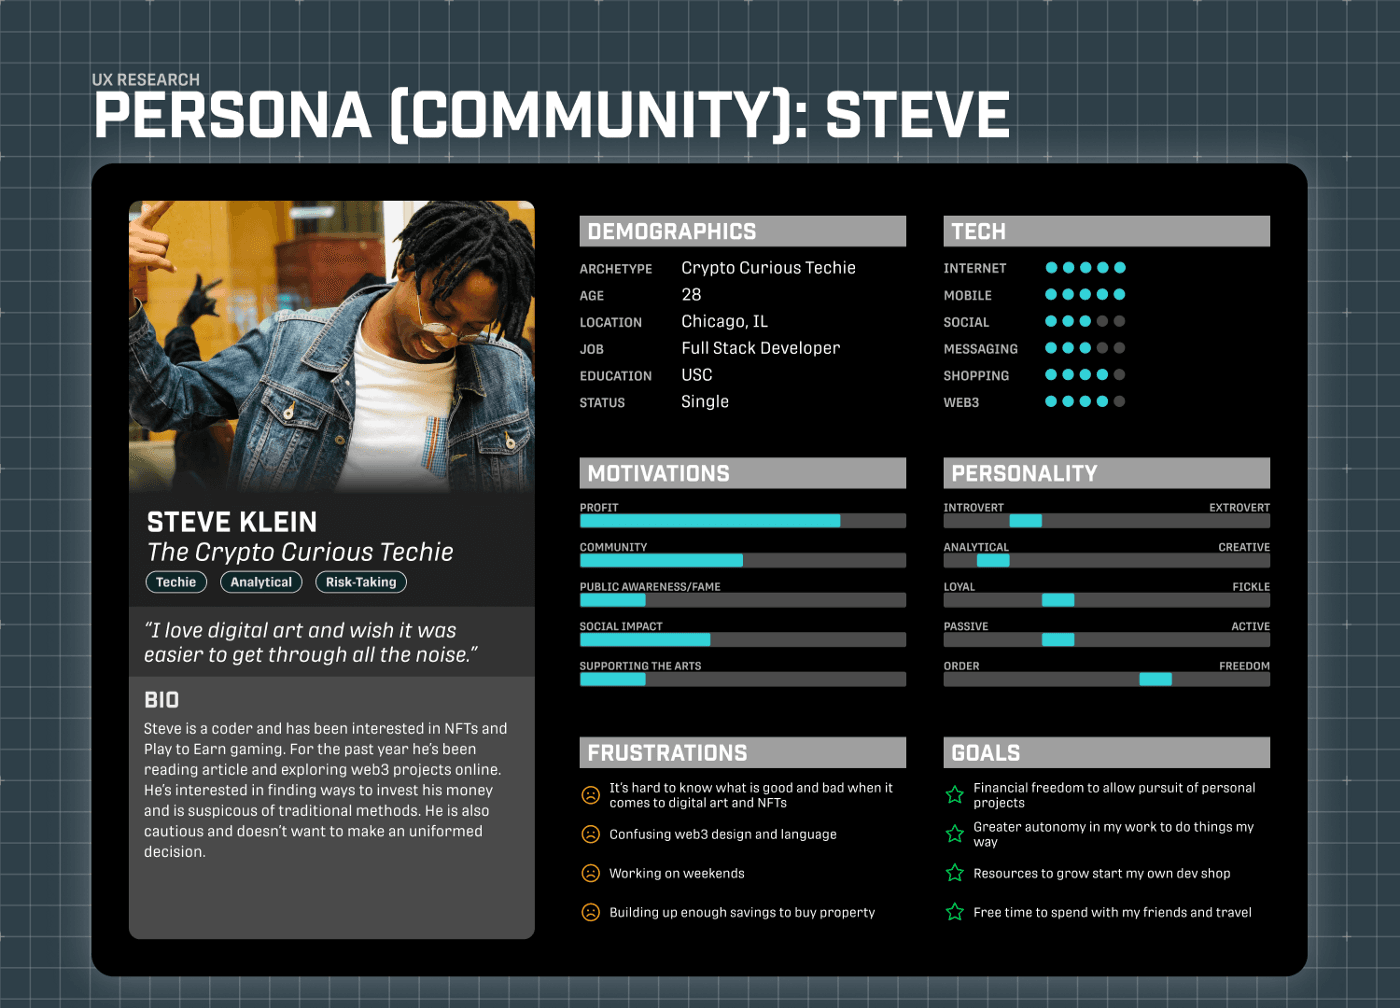 A detailed user persona named Steve